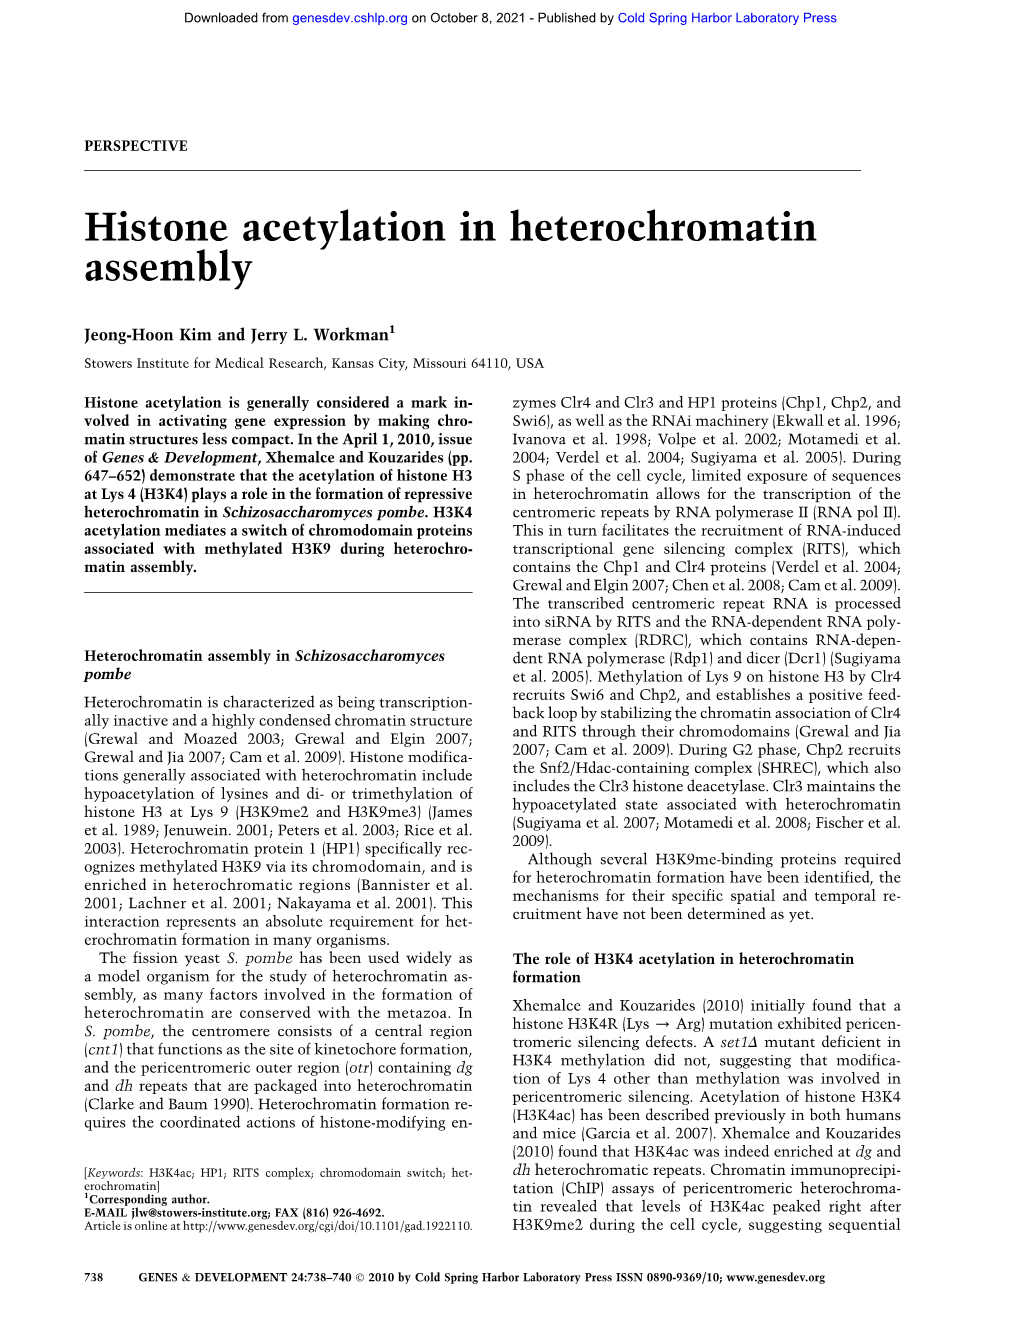 Histone Acetylation in Heterochromatin Assembly